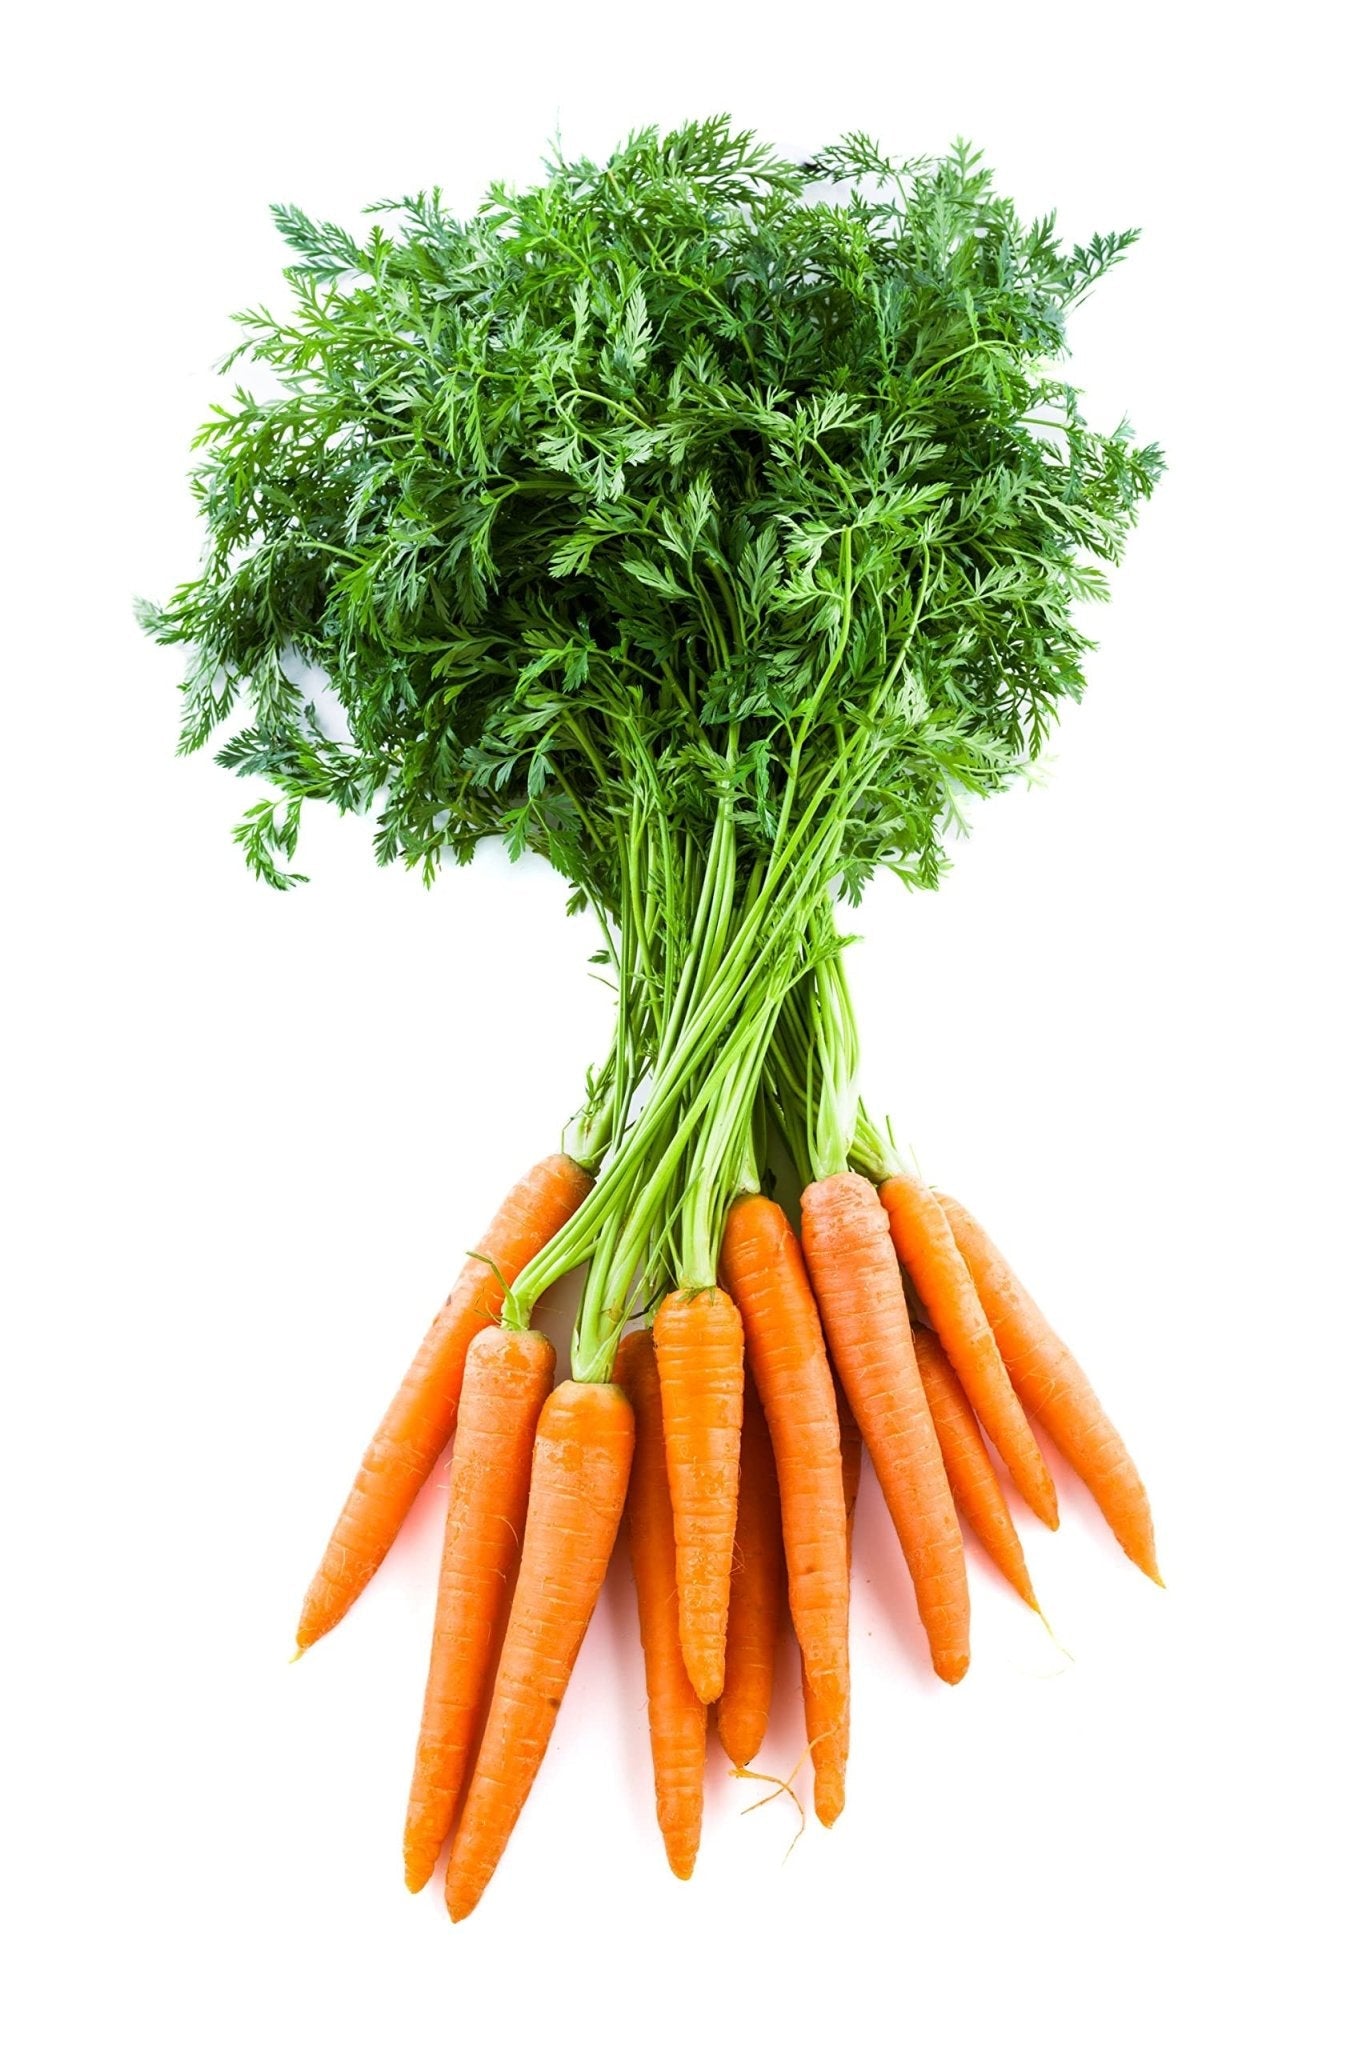 Carrot 'Chantenay' - 12 x Plug Plant Pack - AcquaGarden